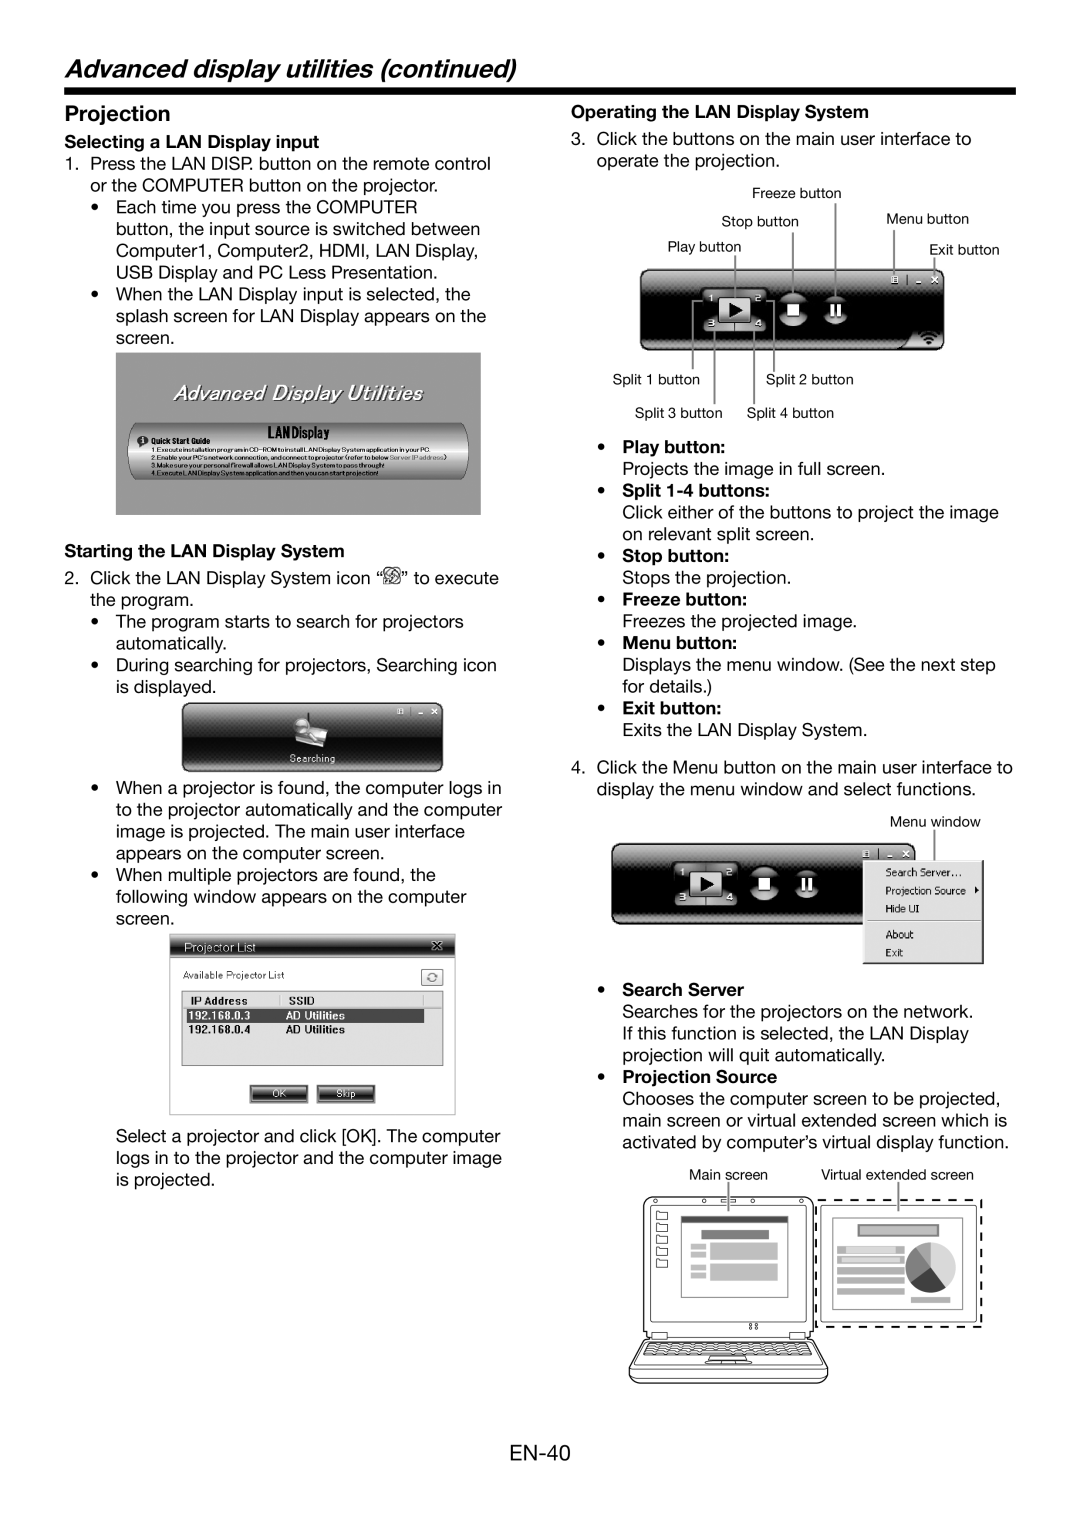 Mitsubishi Electronics WD385U-EST Projection, Advanced display utilities continued, Selecting a LAN Display input 